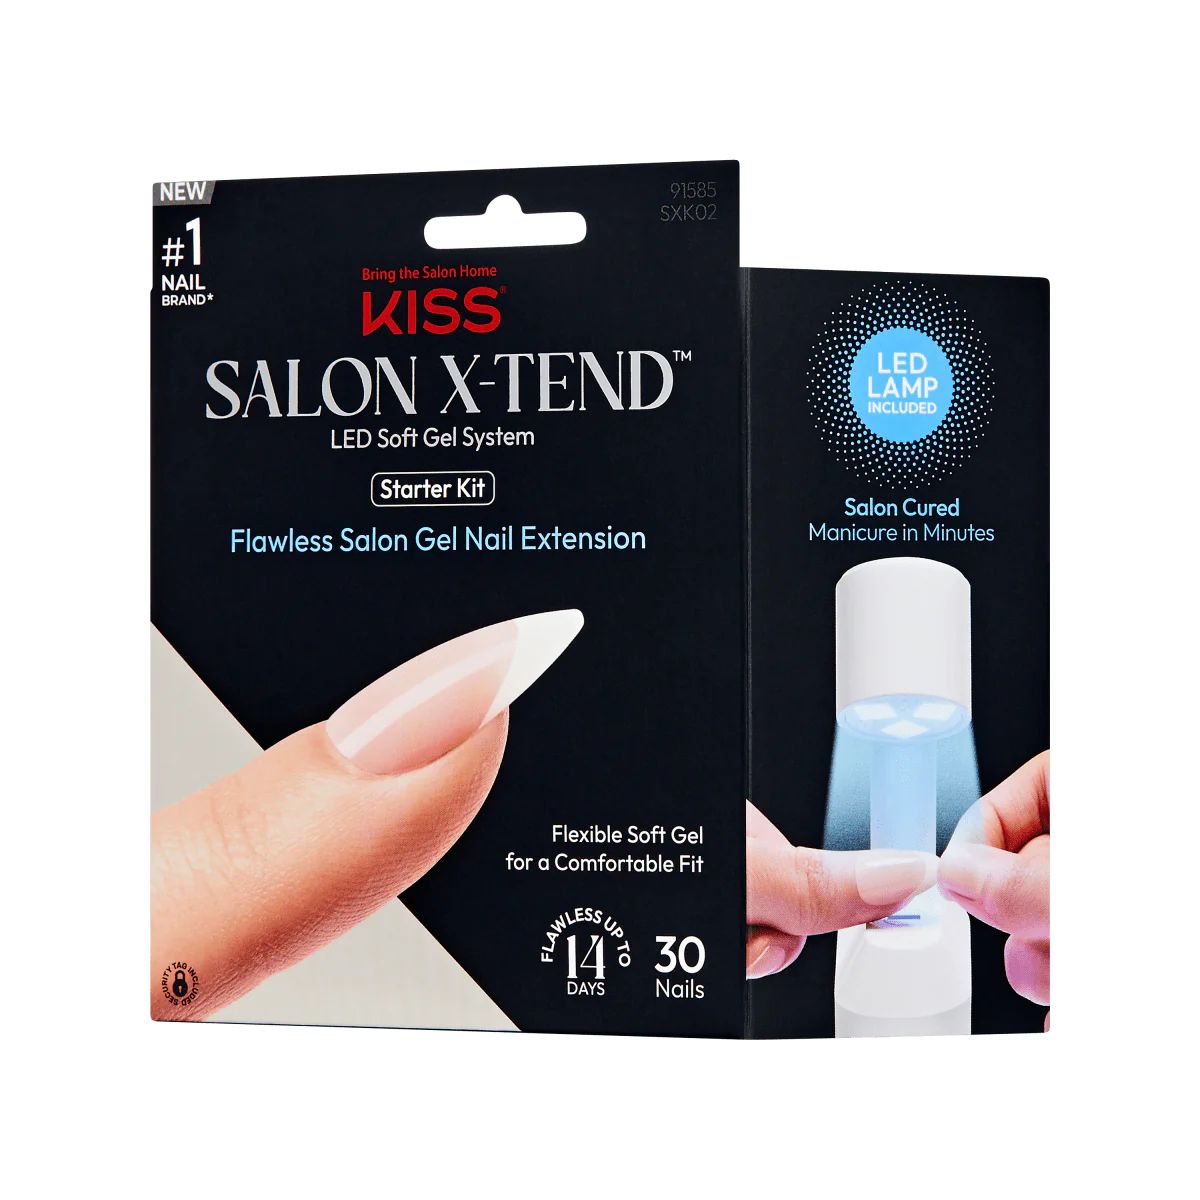 KISS Salon X-tend LED Soft Gel System Starter Kit, 'Pure', White, Medium Oval, 36 Ct. | KISS, imPRESS, JOAH